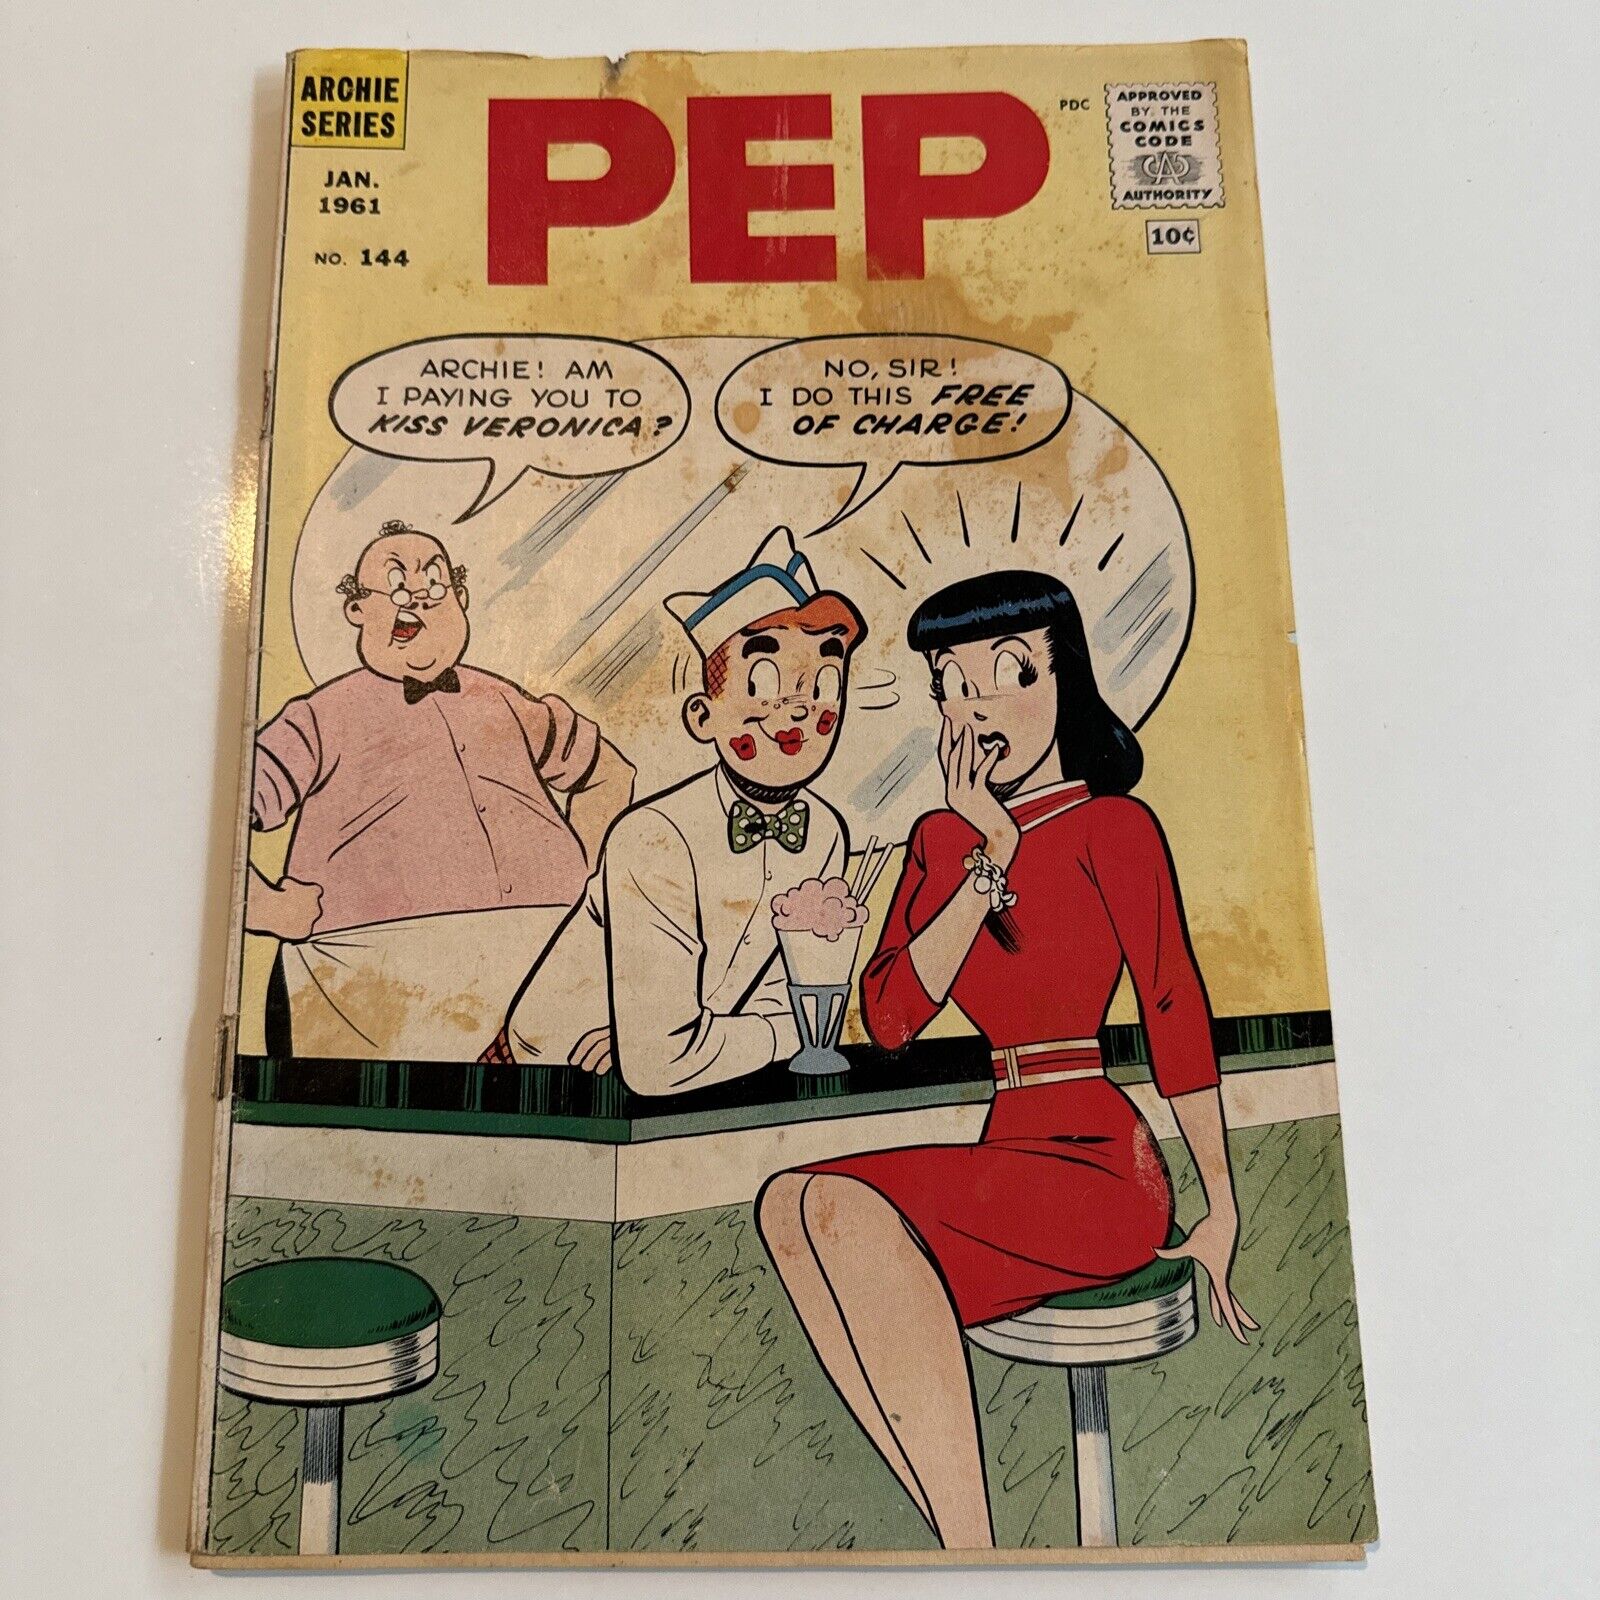 PEP COMICS # 144 | KATY KEENE FURRY STORY  BETTY & VERONICA | Archie 1961 GD/VG